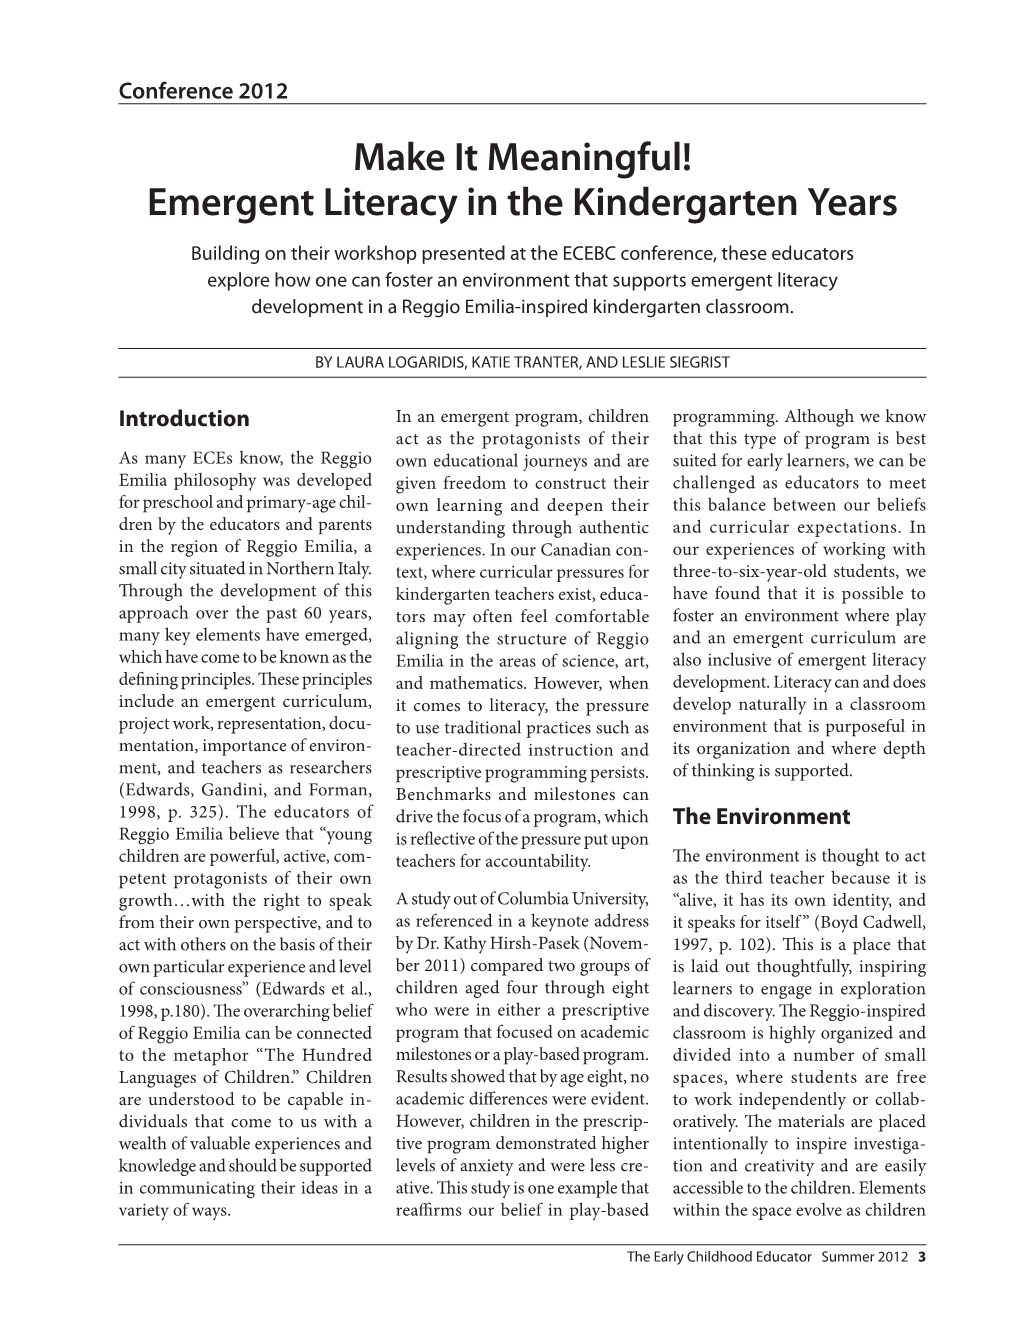 Make It Meaningful! Emergent Literacy in the Kindergarten Years